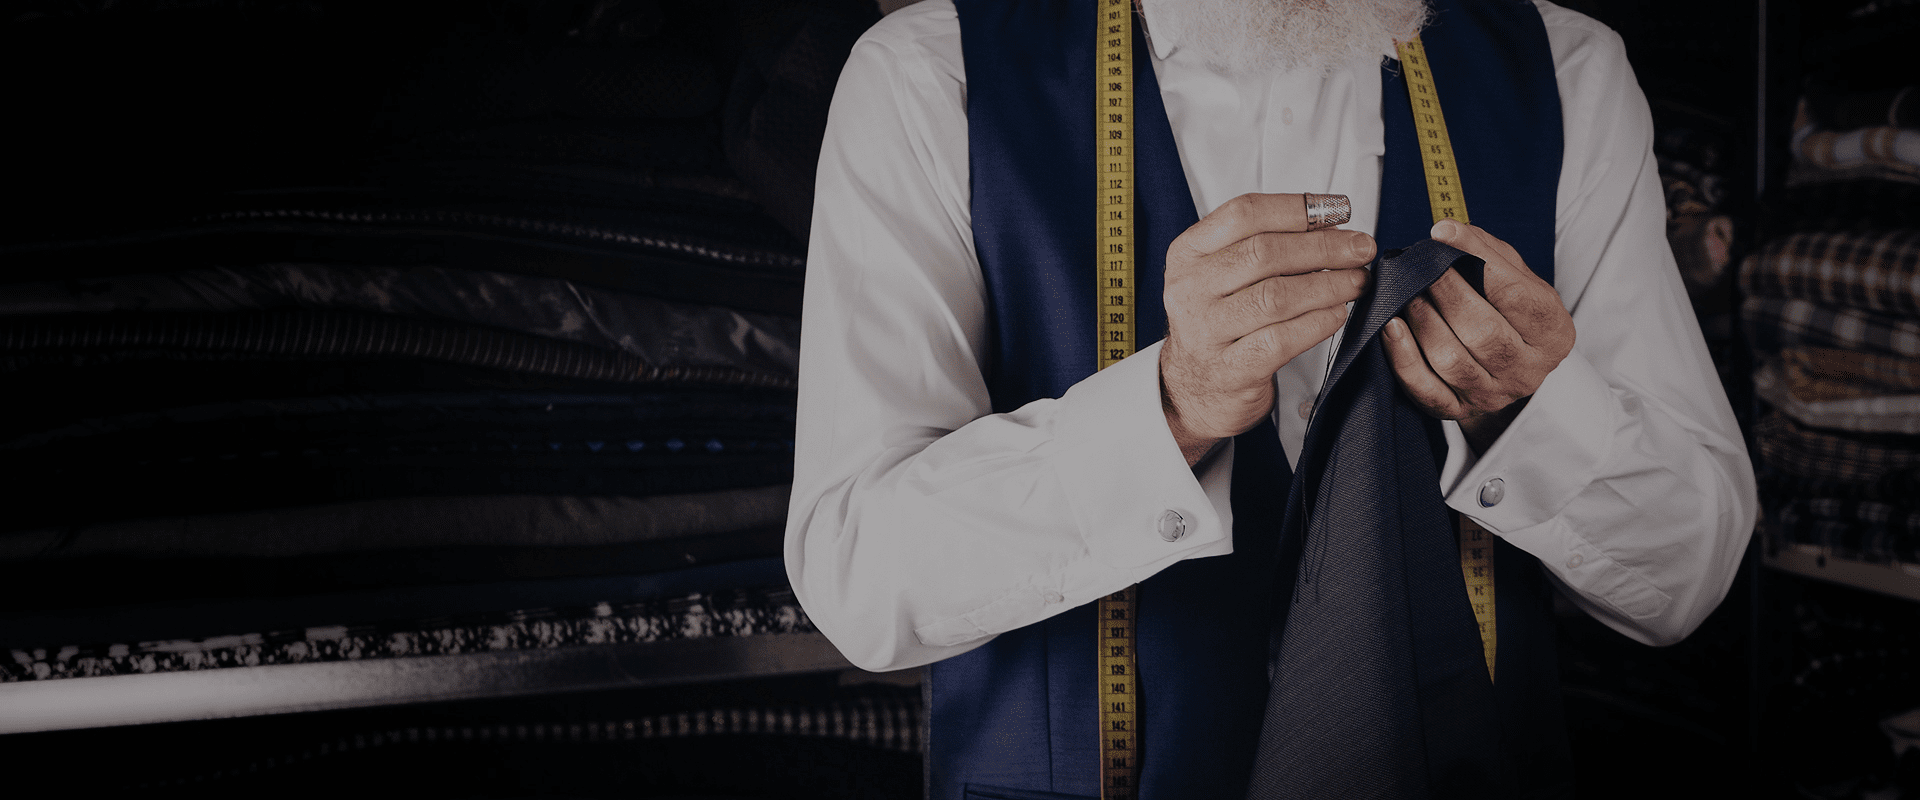 Germanicos bespoke tailor sydney sewing suit